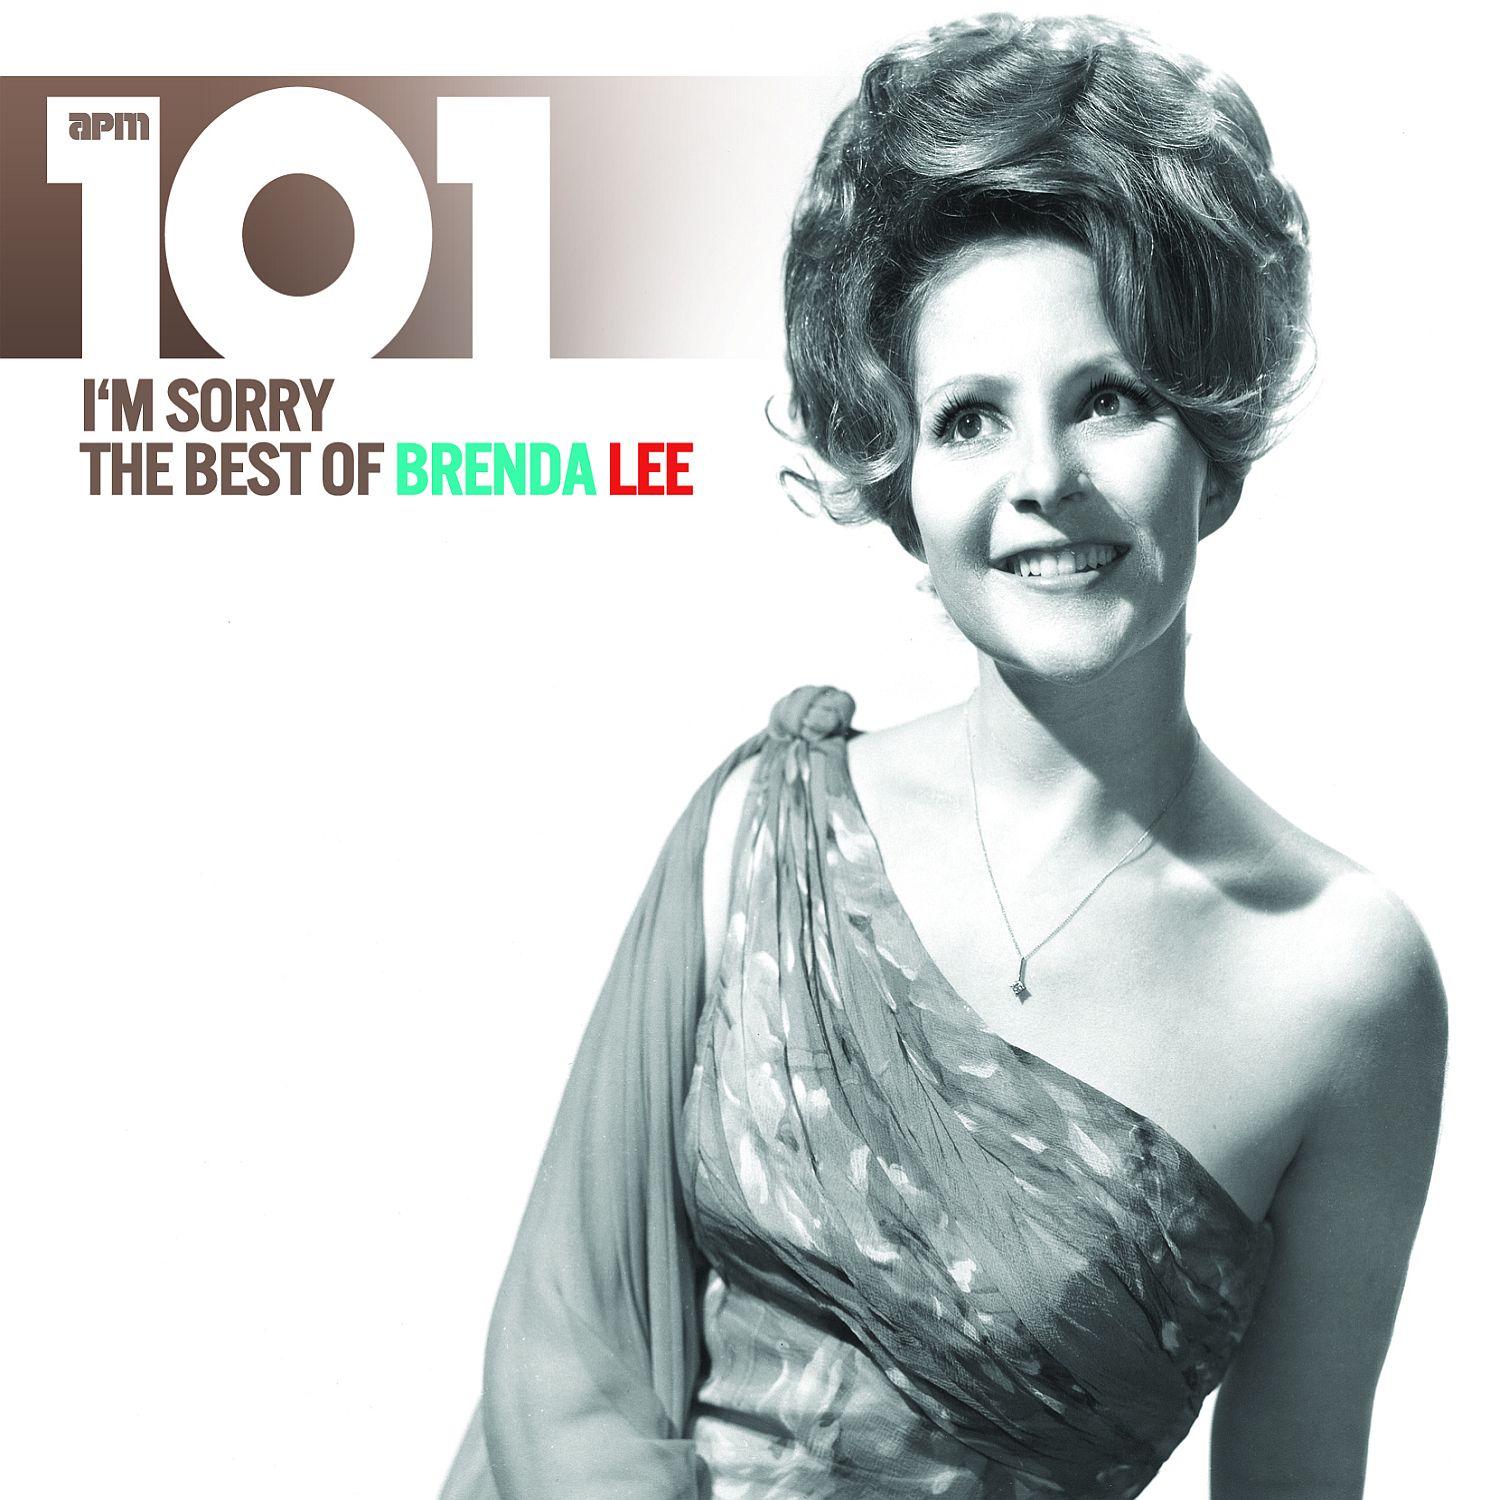 101 - I'm Sorry: The Best of Brenda Lee